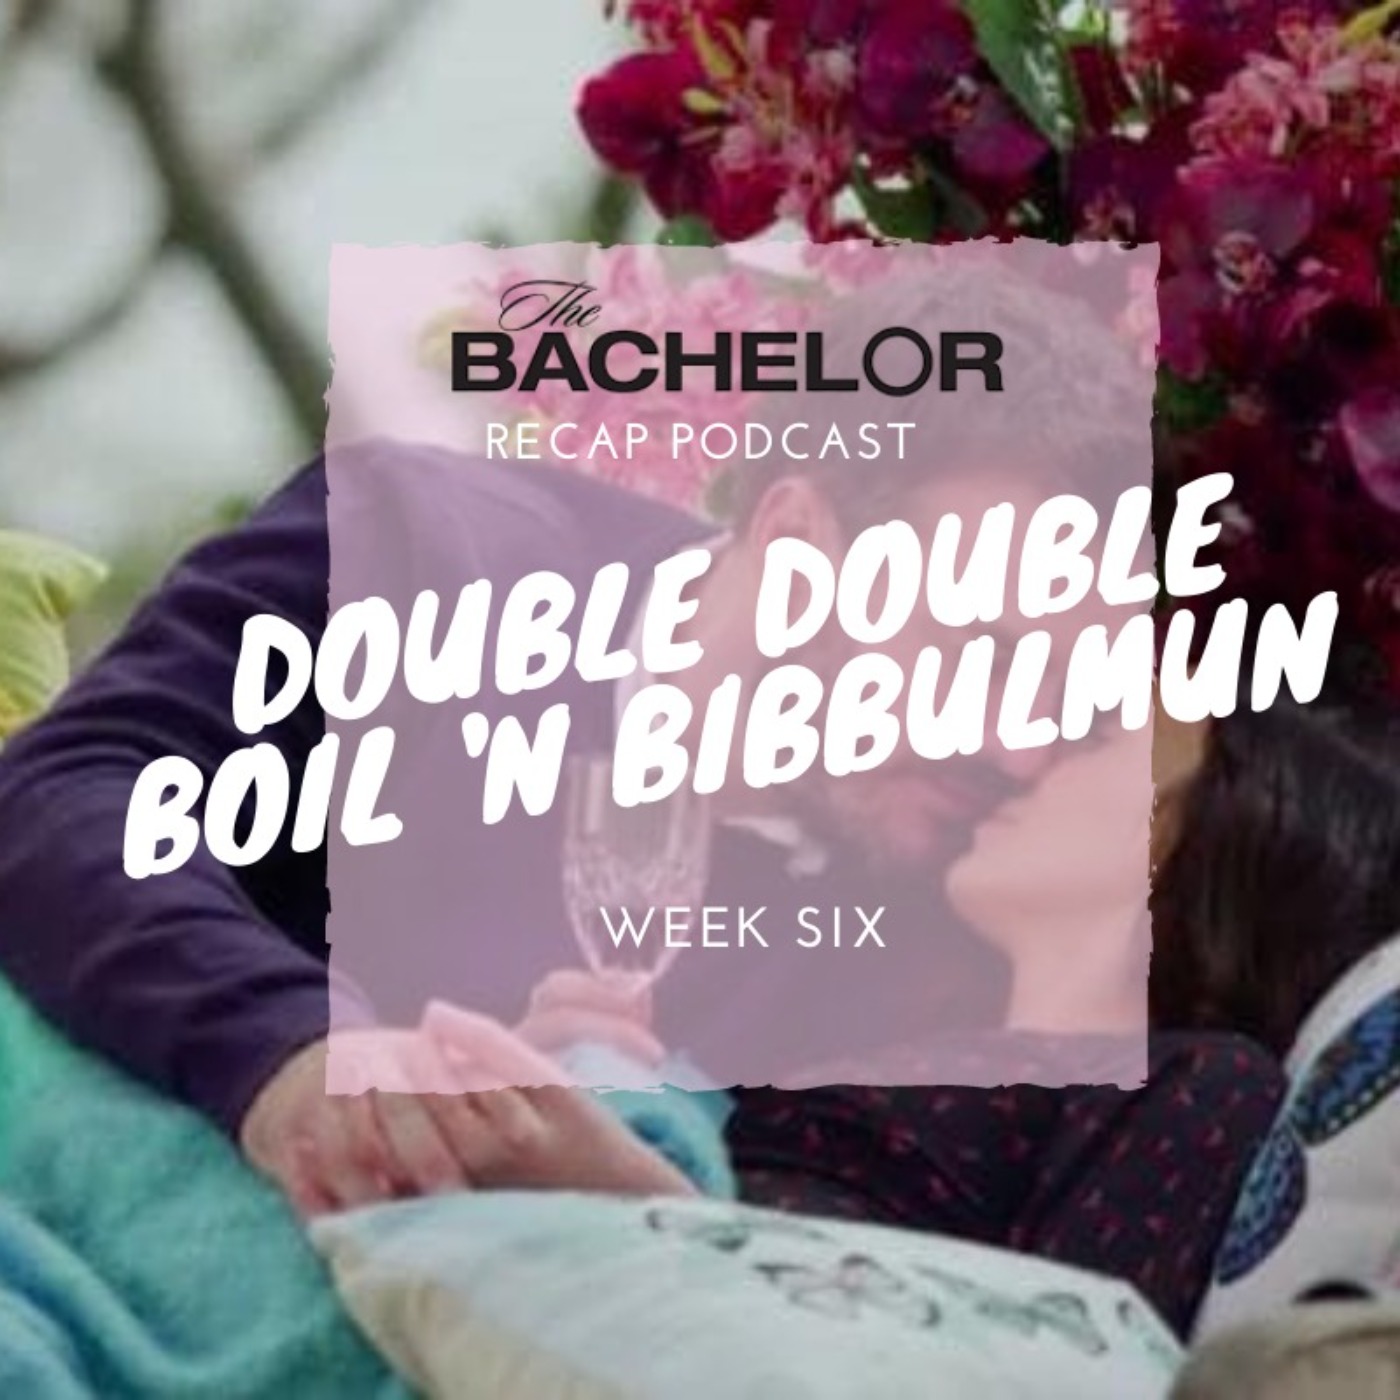 THE BACHELOR week 6: Double Double Boil 'n Bibbulmun